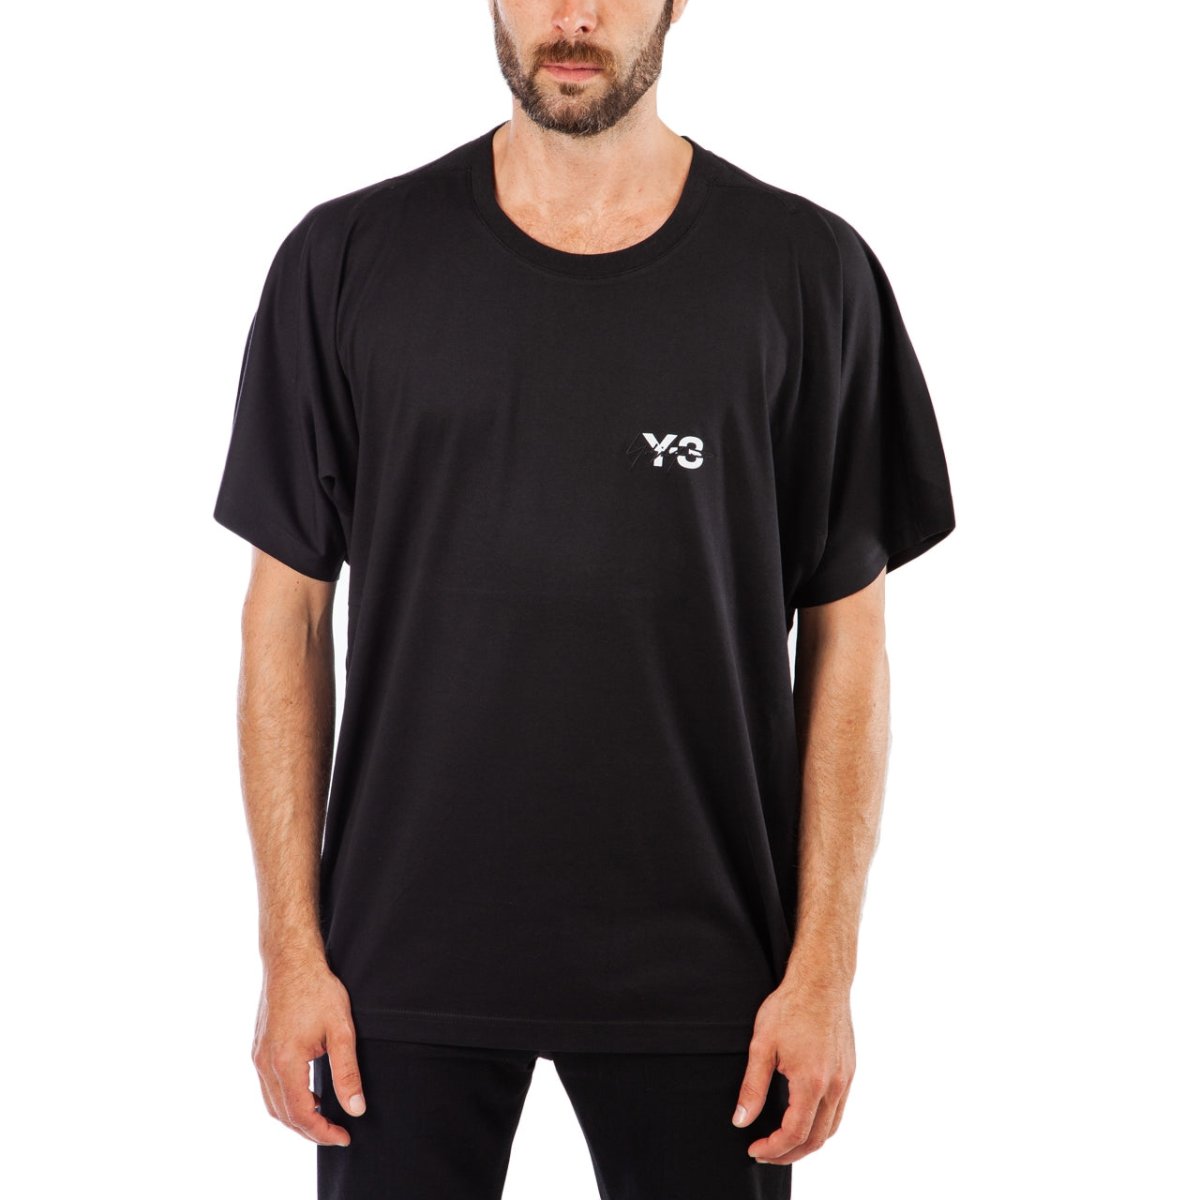 Y-3 Signature SS T-Shirt (Schwarz)  - Allike Store